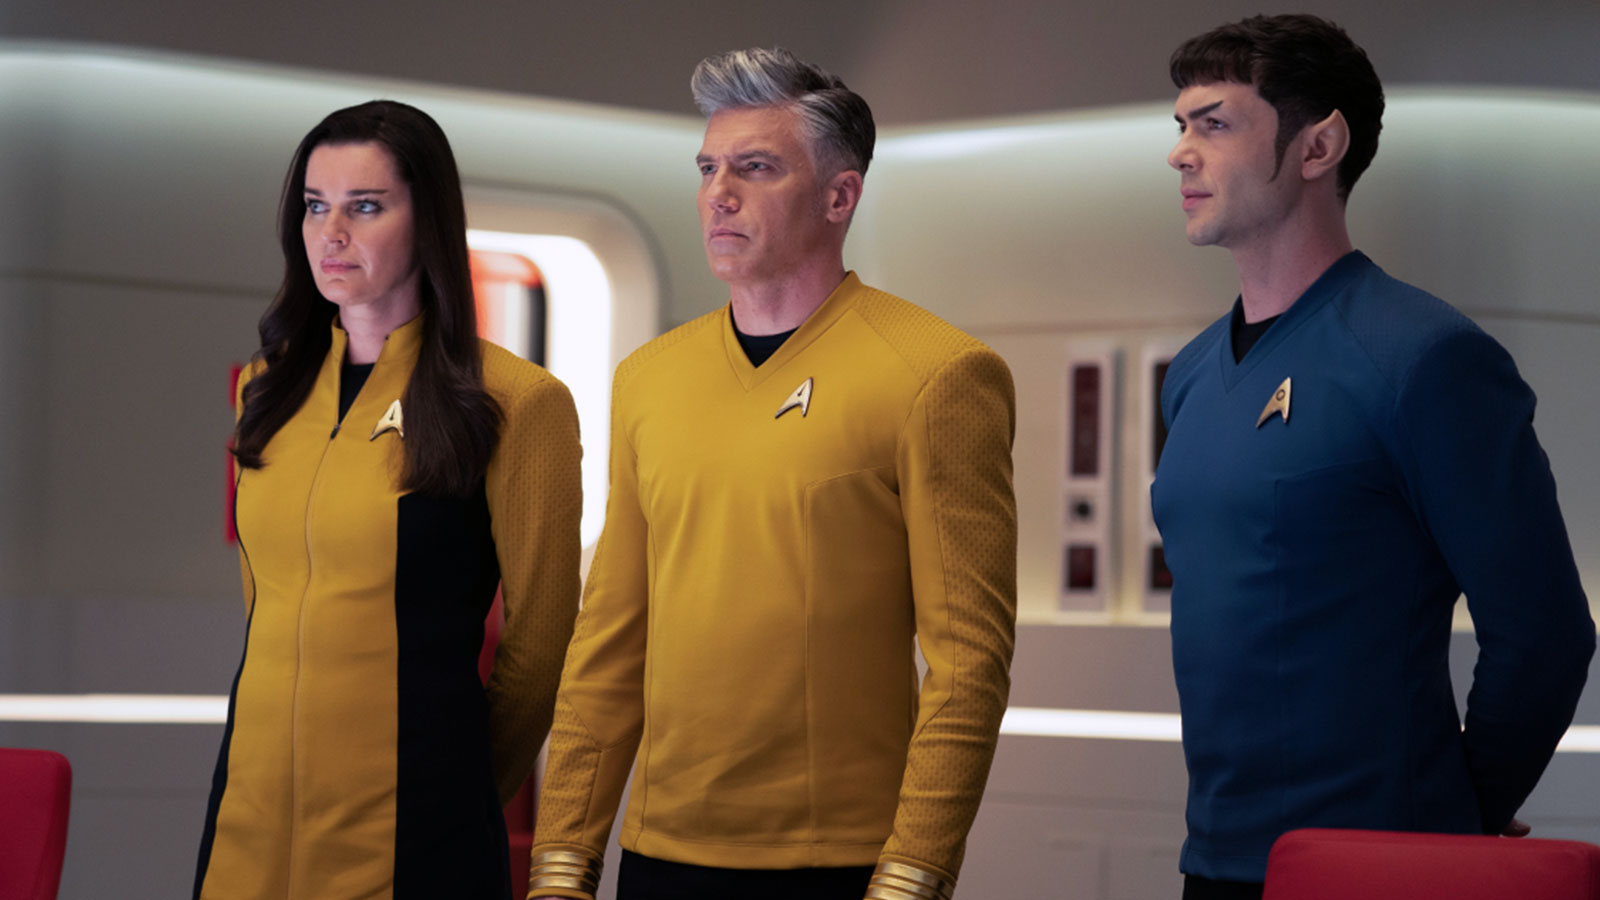 Star Trek: Strange New Worlds Episode 2 “Children of the Comet” trailer + new photos